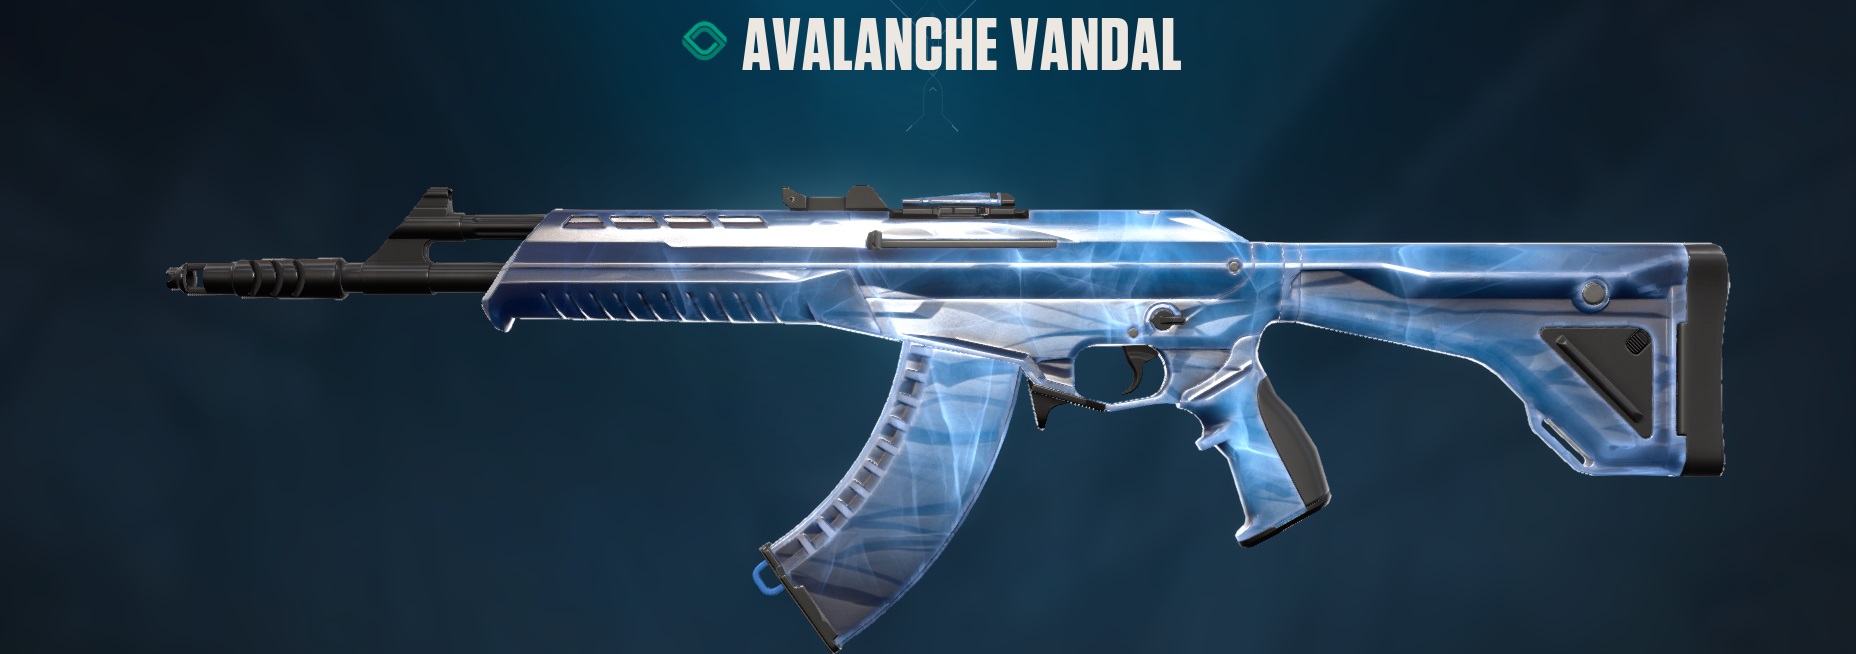 Avalanche Valorant Vandal Skin